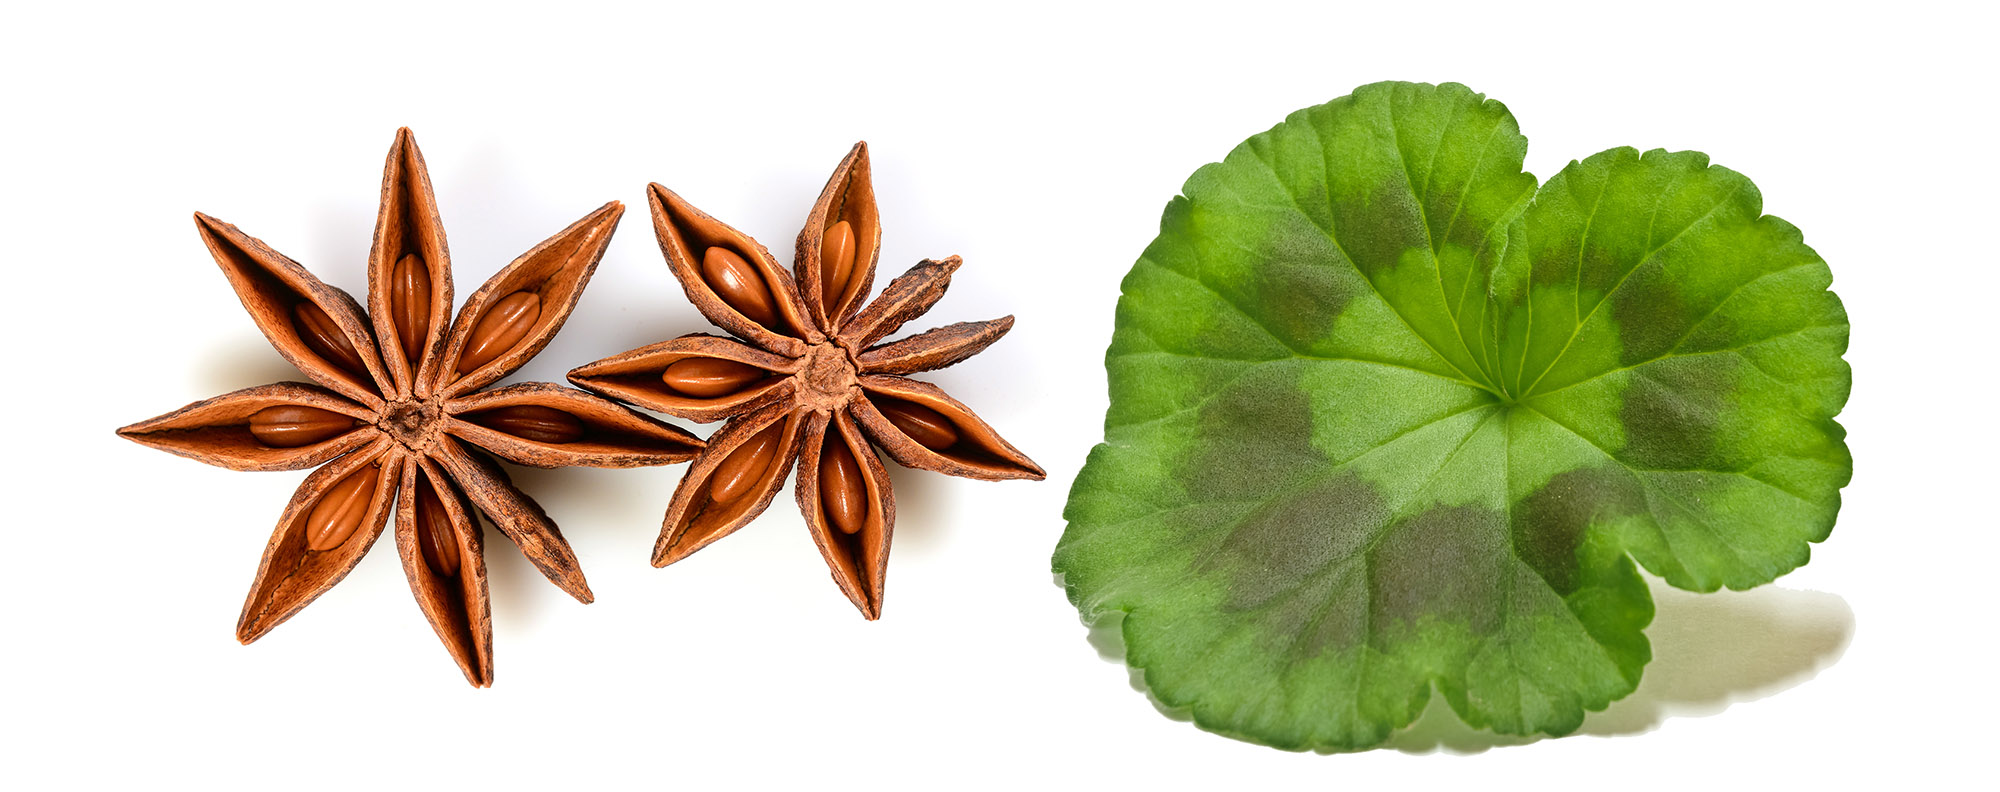 Star anise and geranium leaf.